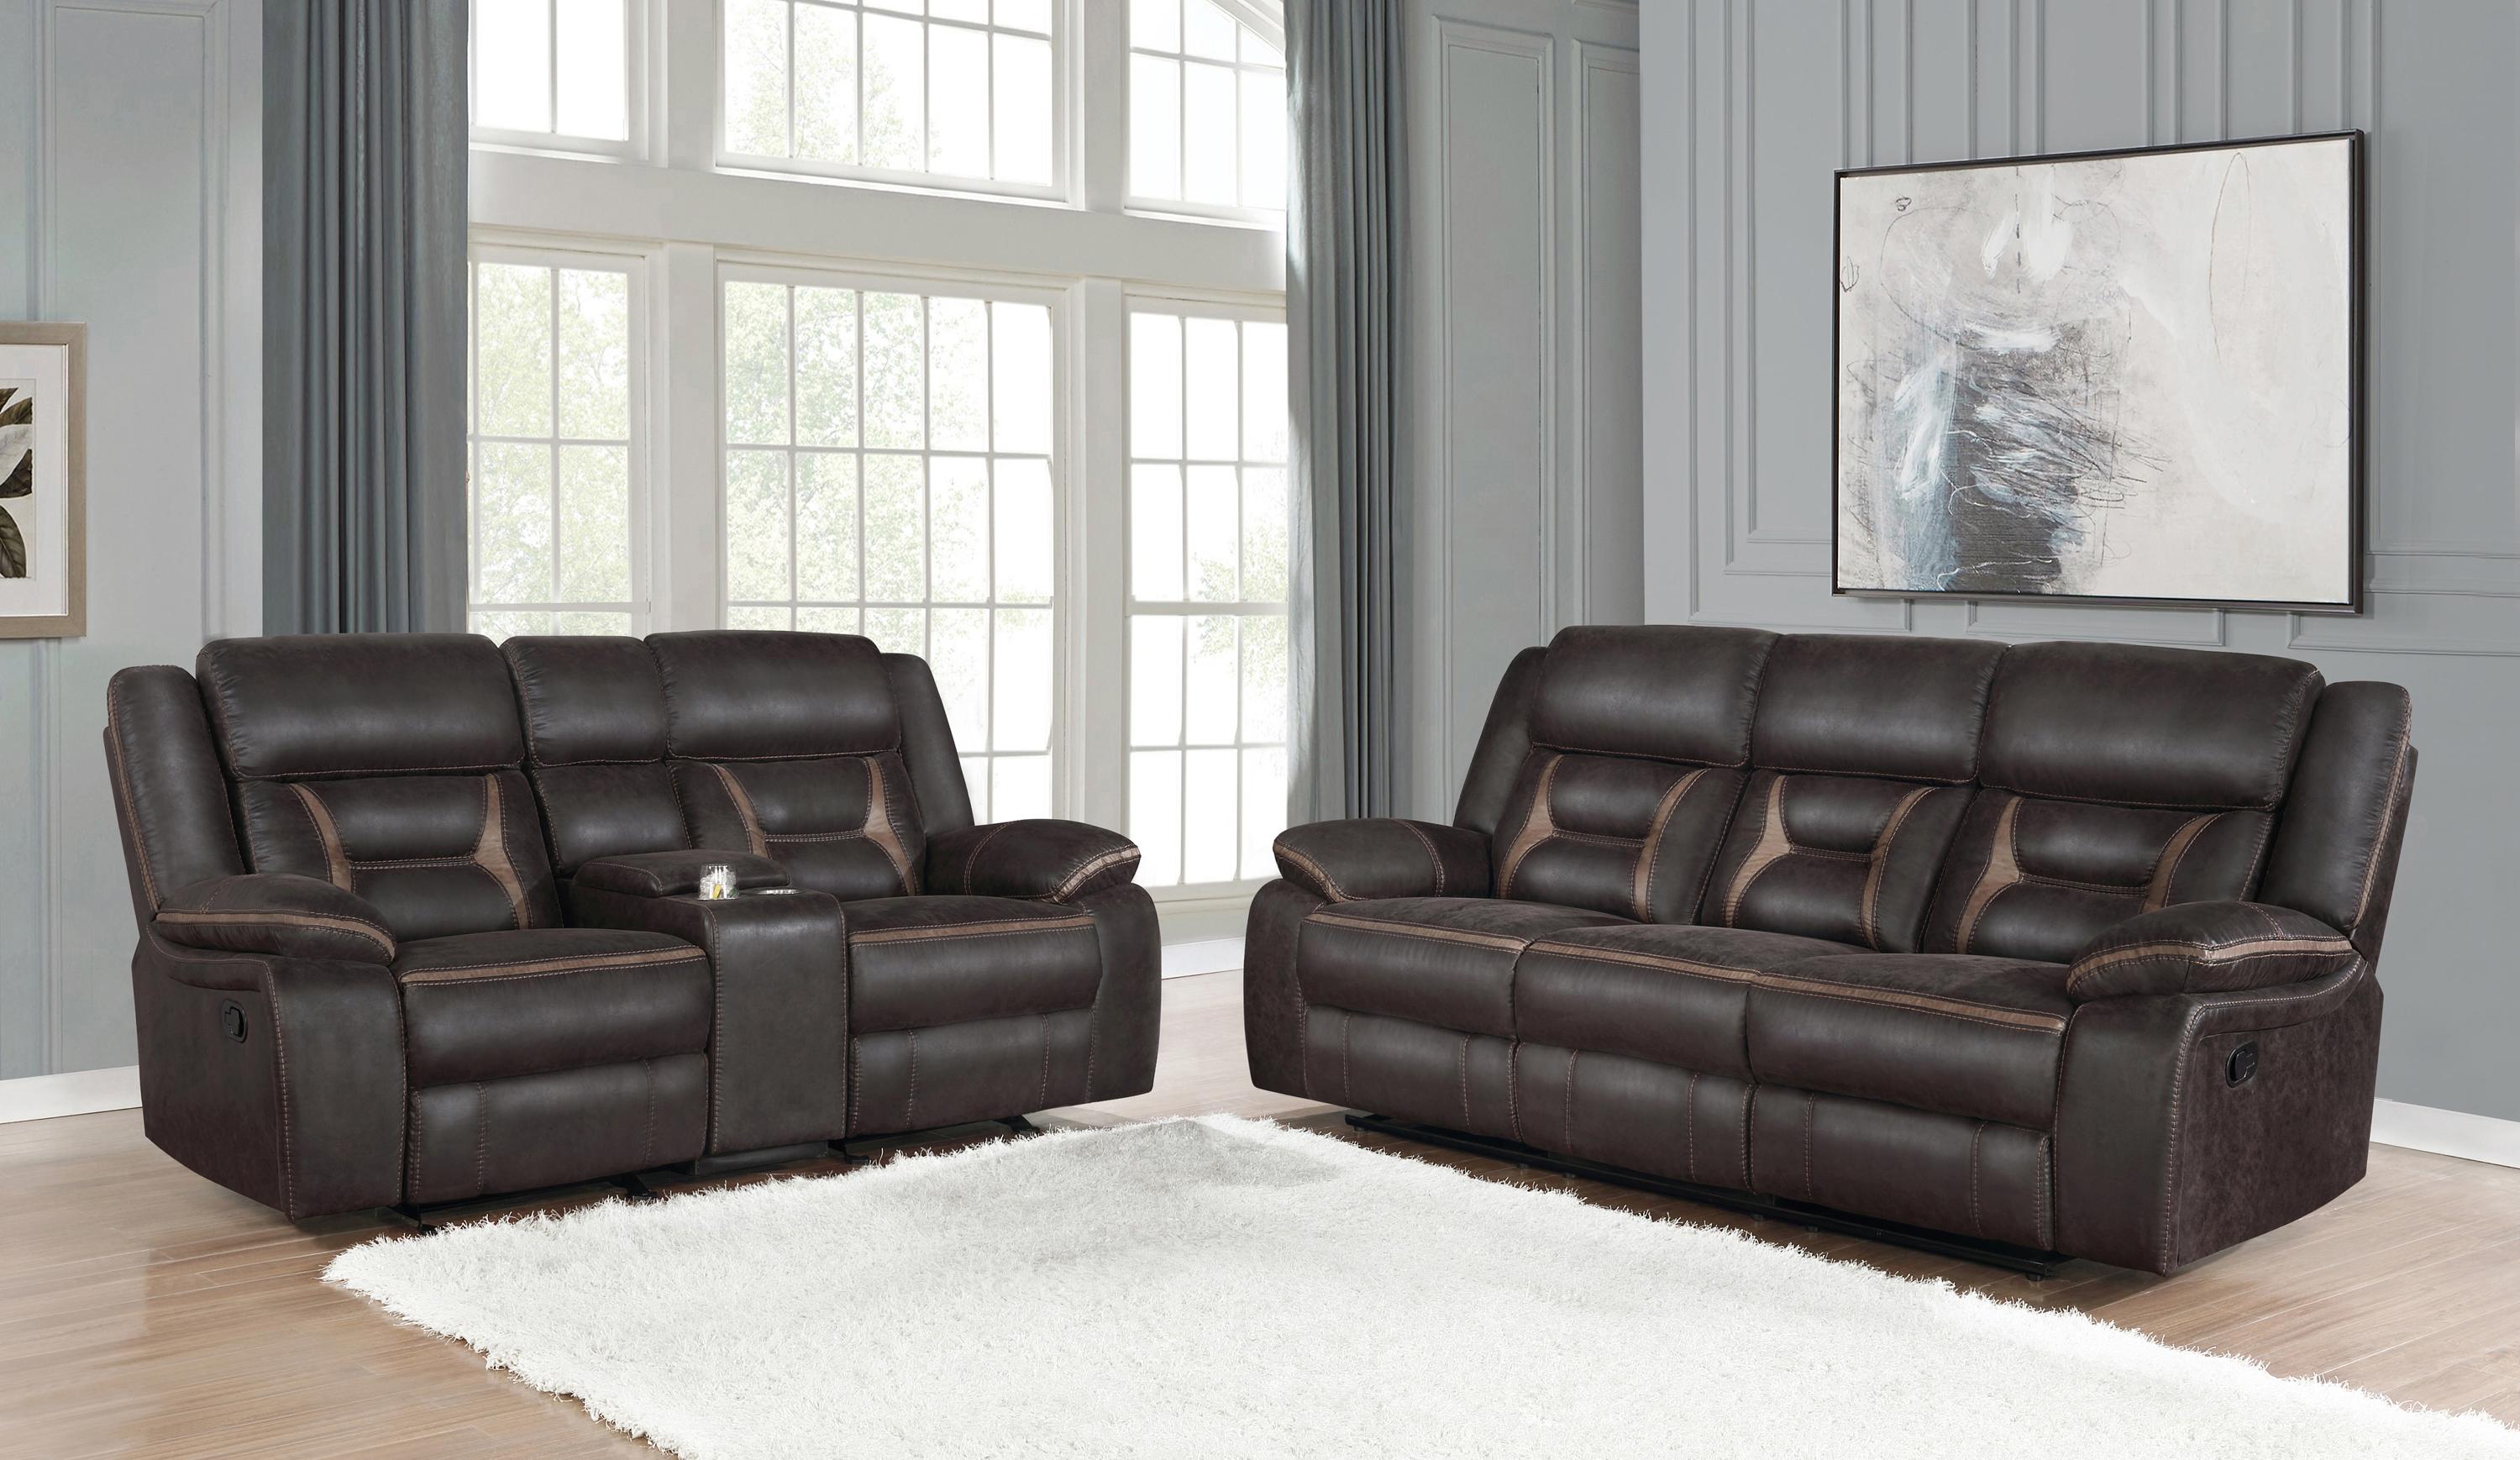 Transitional Living Room Set 651354-S2 Greer 651354-S2 in Dark Brown Leatherette